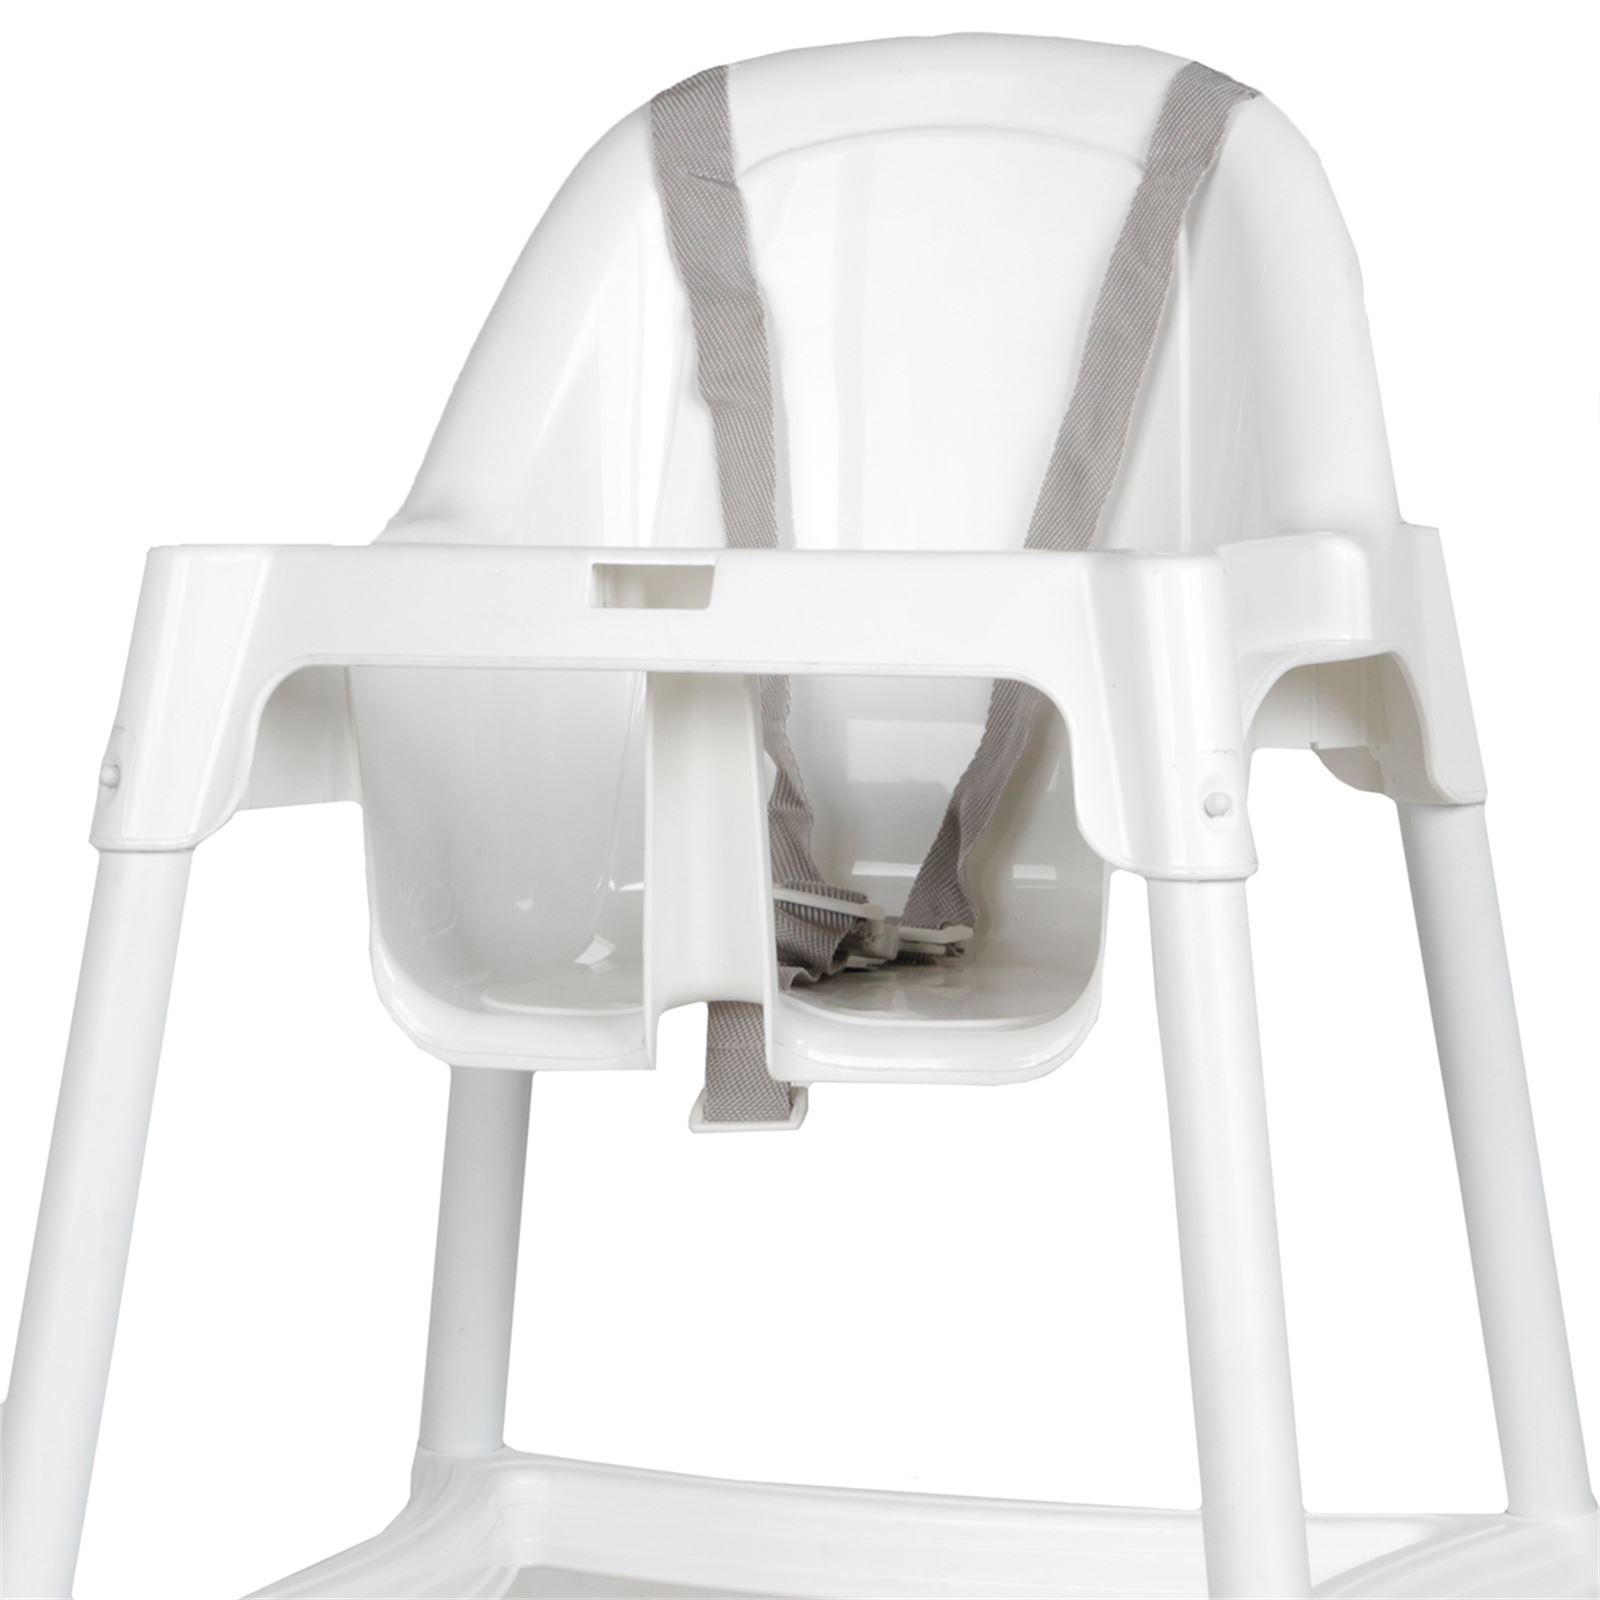 Lava Baby Basic Mama Sandalyesi Beyaz